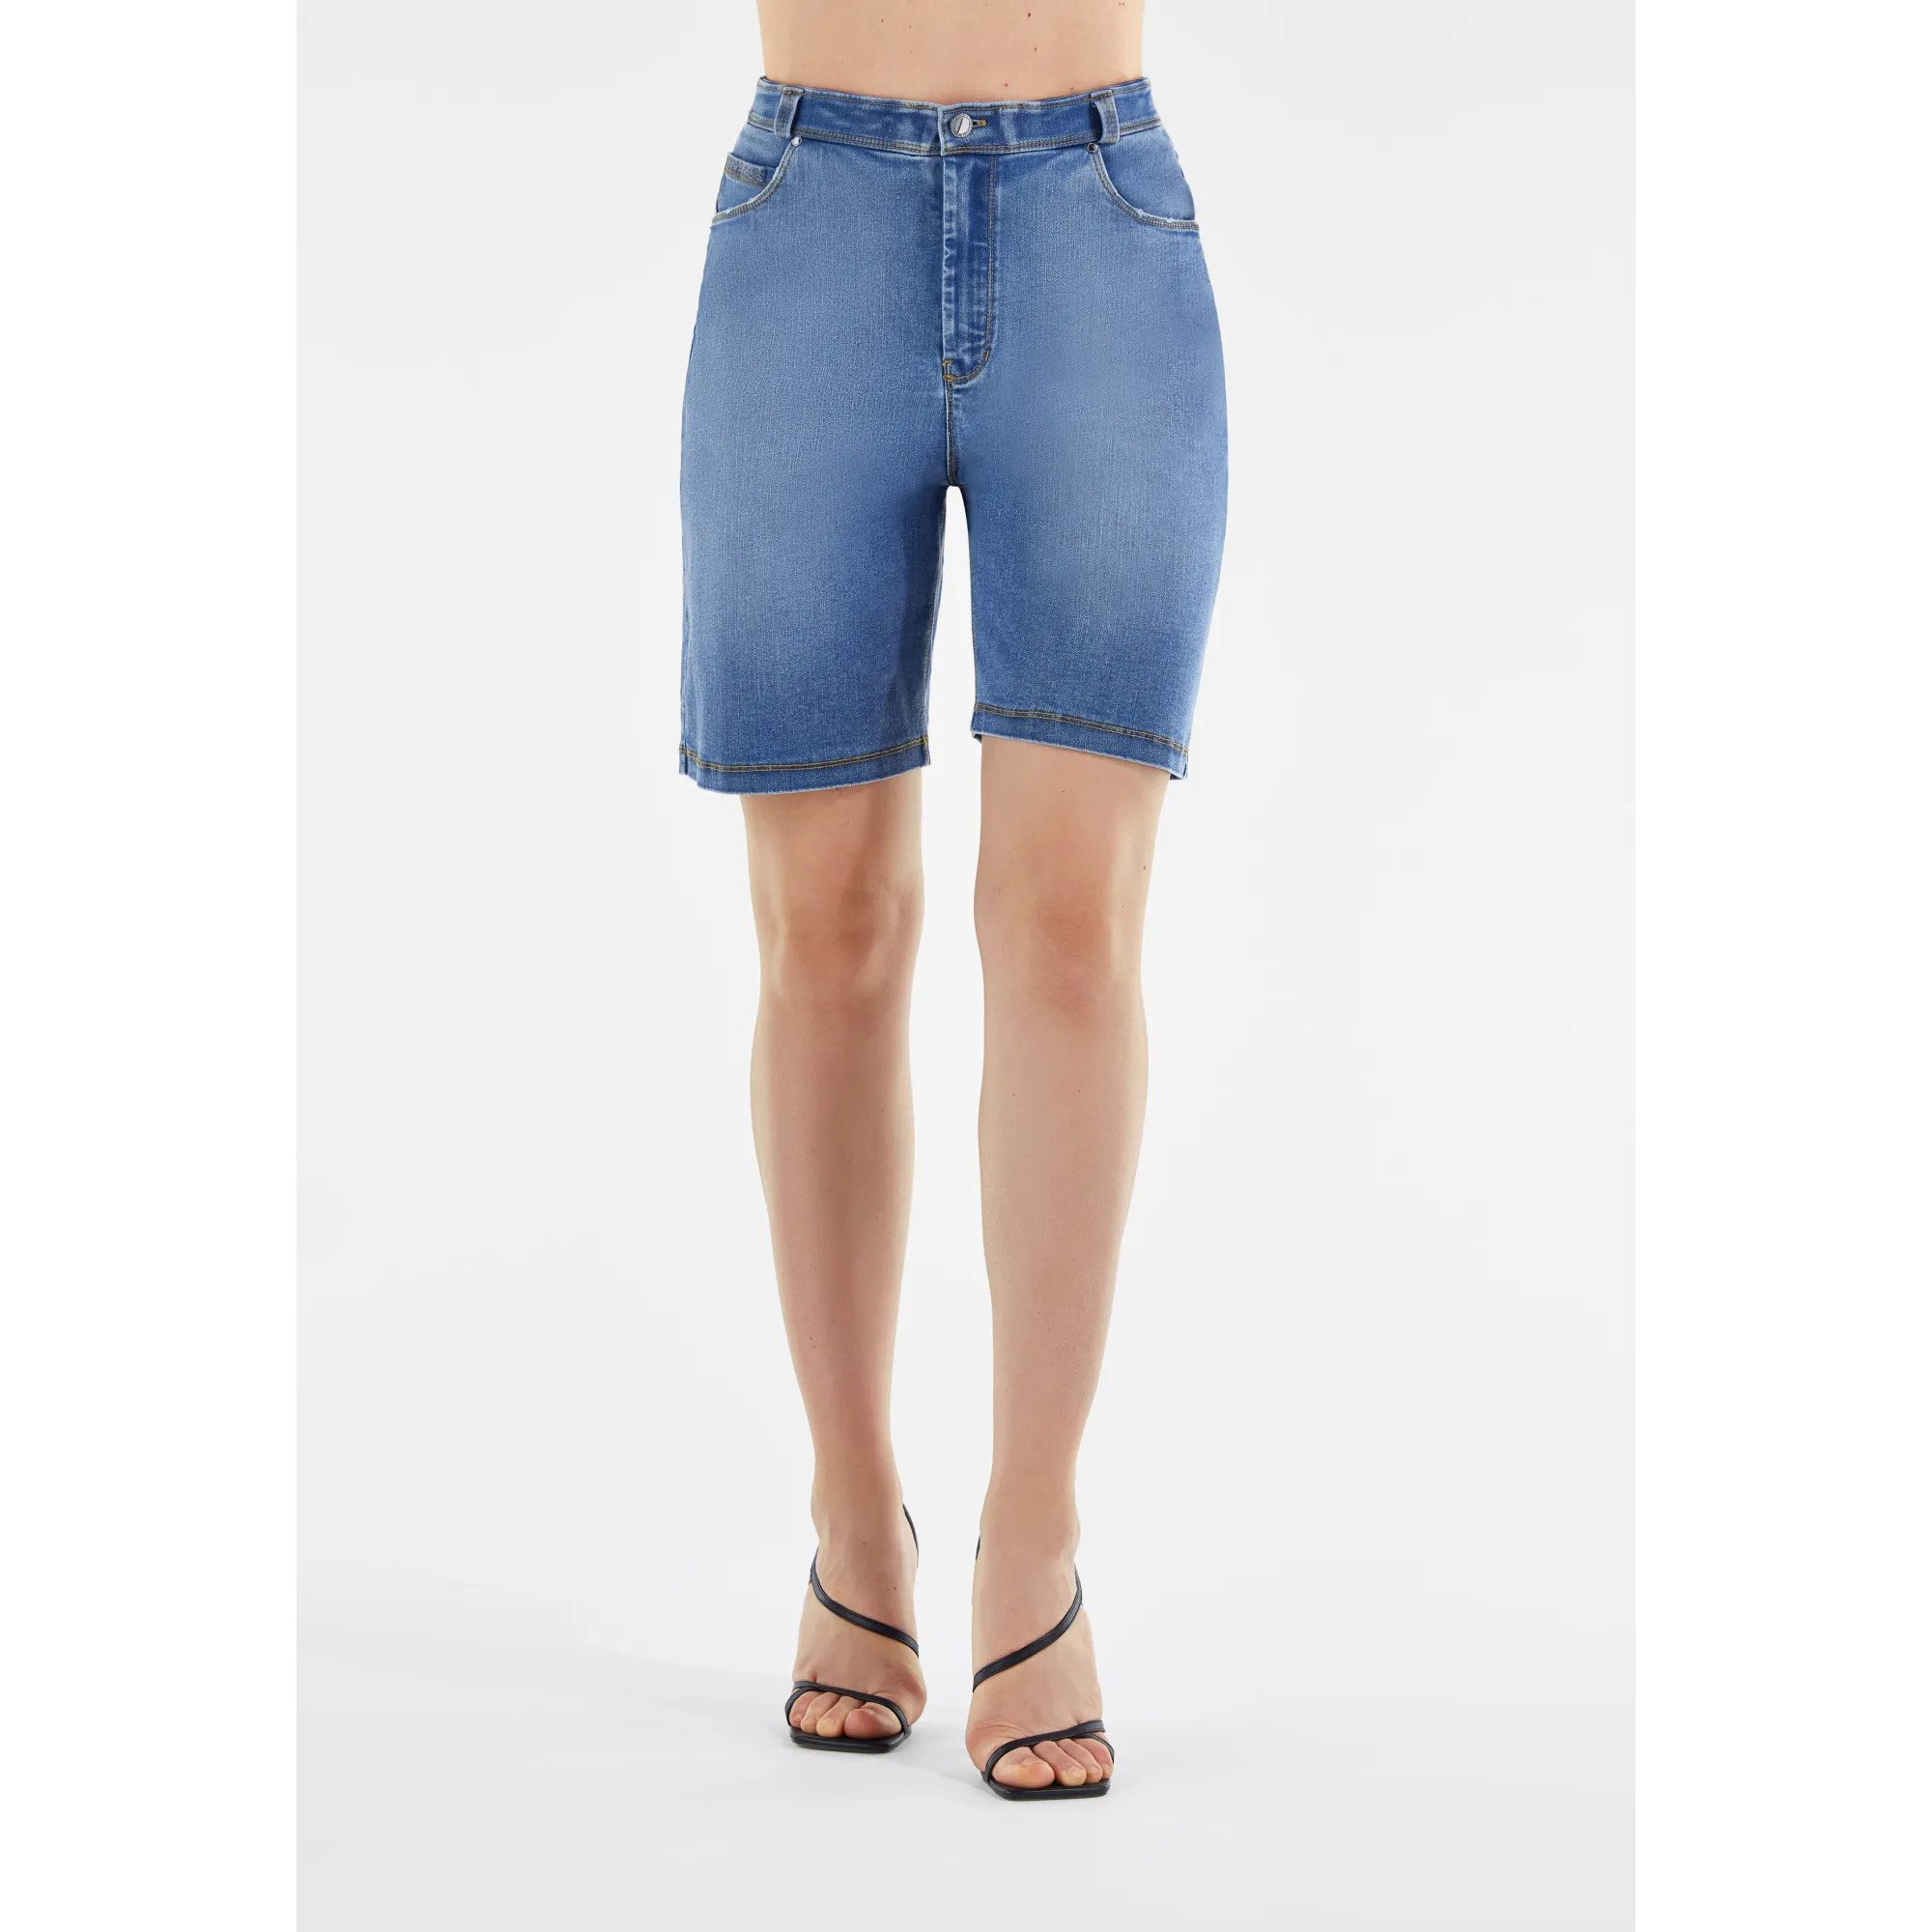 Freddy Damen Fit Jeans - Regular Waist Dress Shorts - Distressed Pocket Edges - Blau - Gelbe Nähte - J108Y